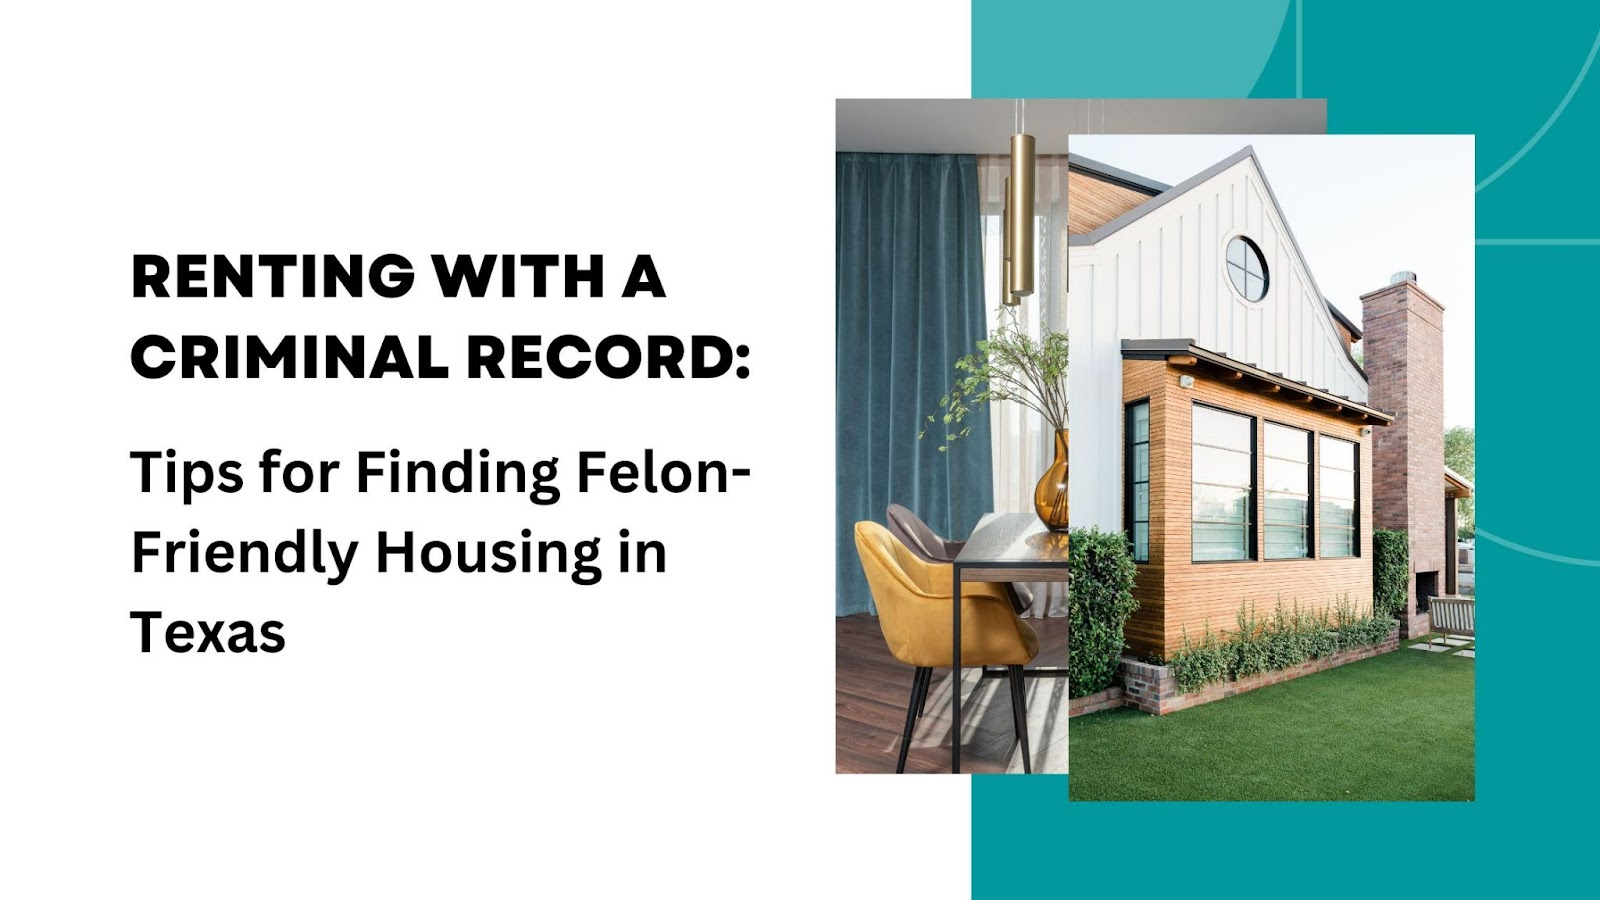 Tips for finding Felon-friendly Housing in Texas